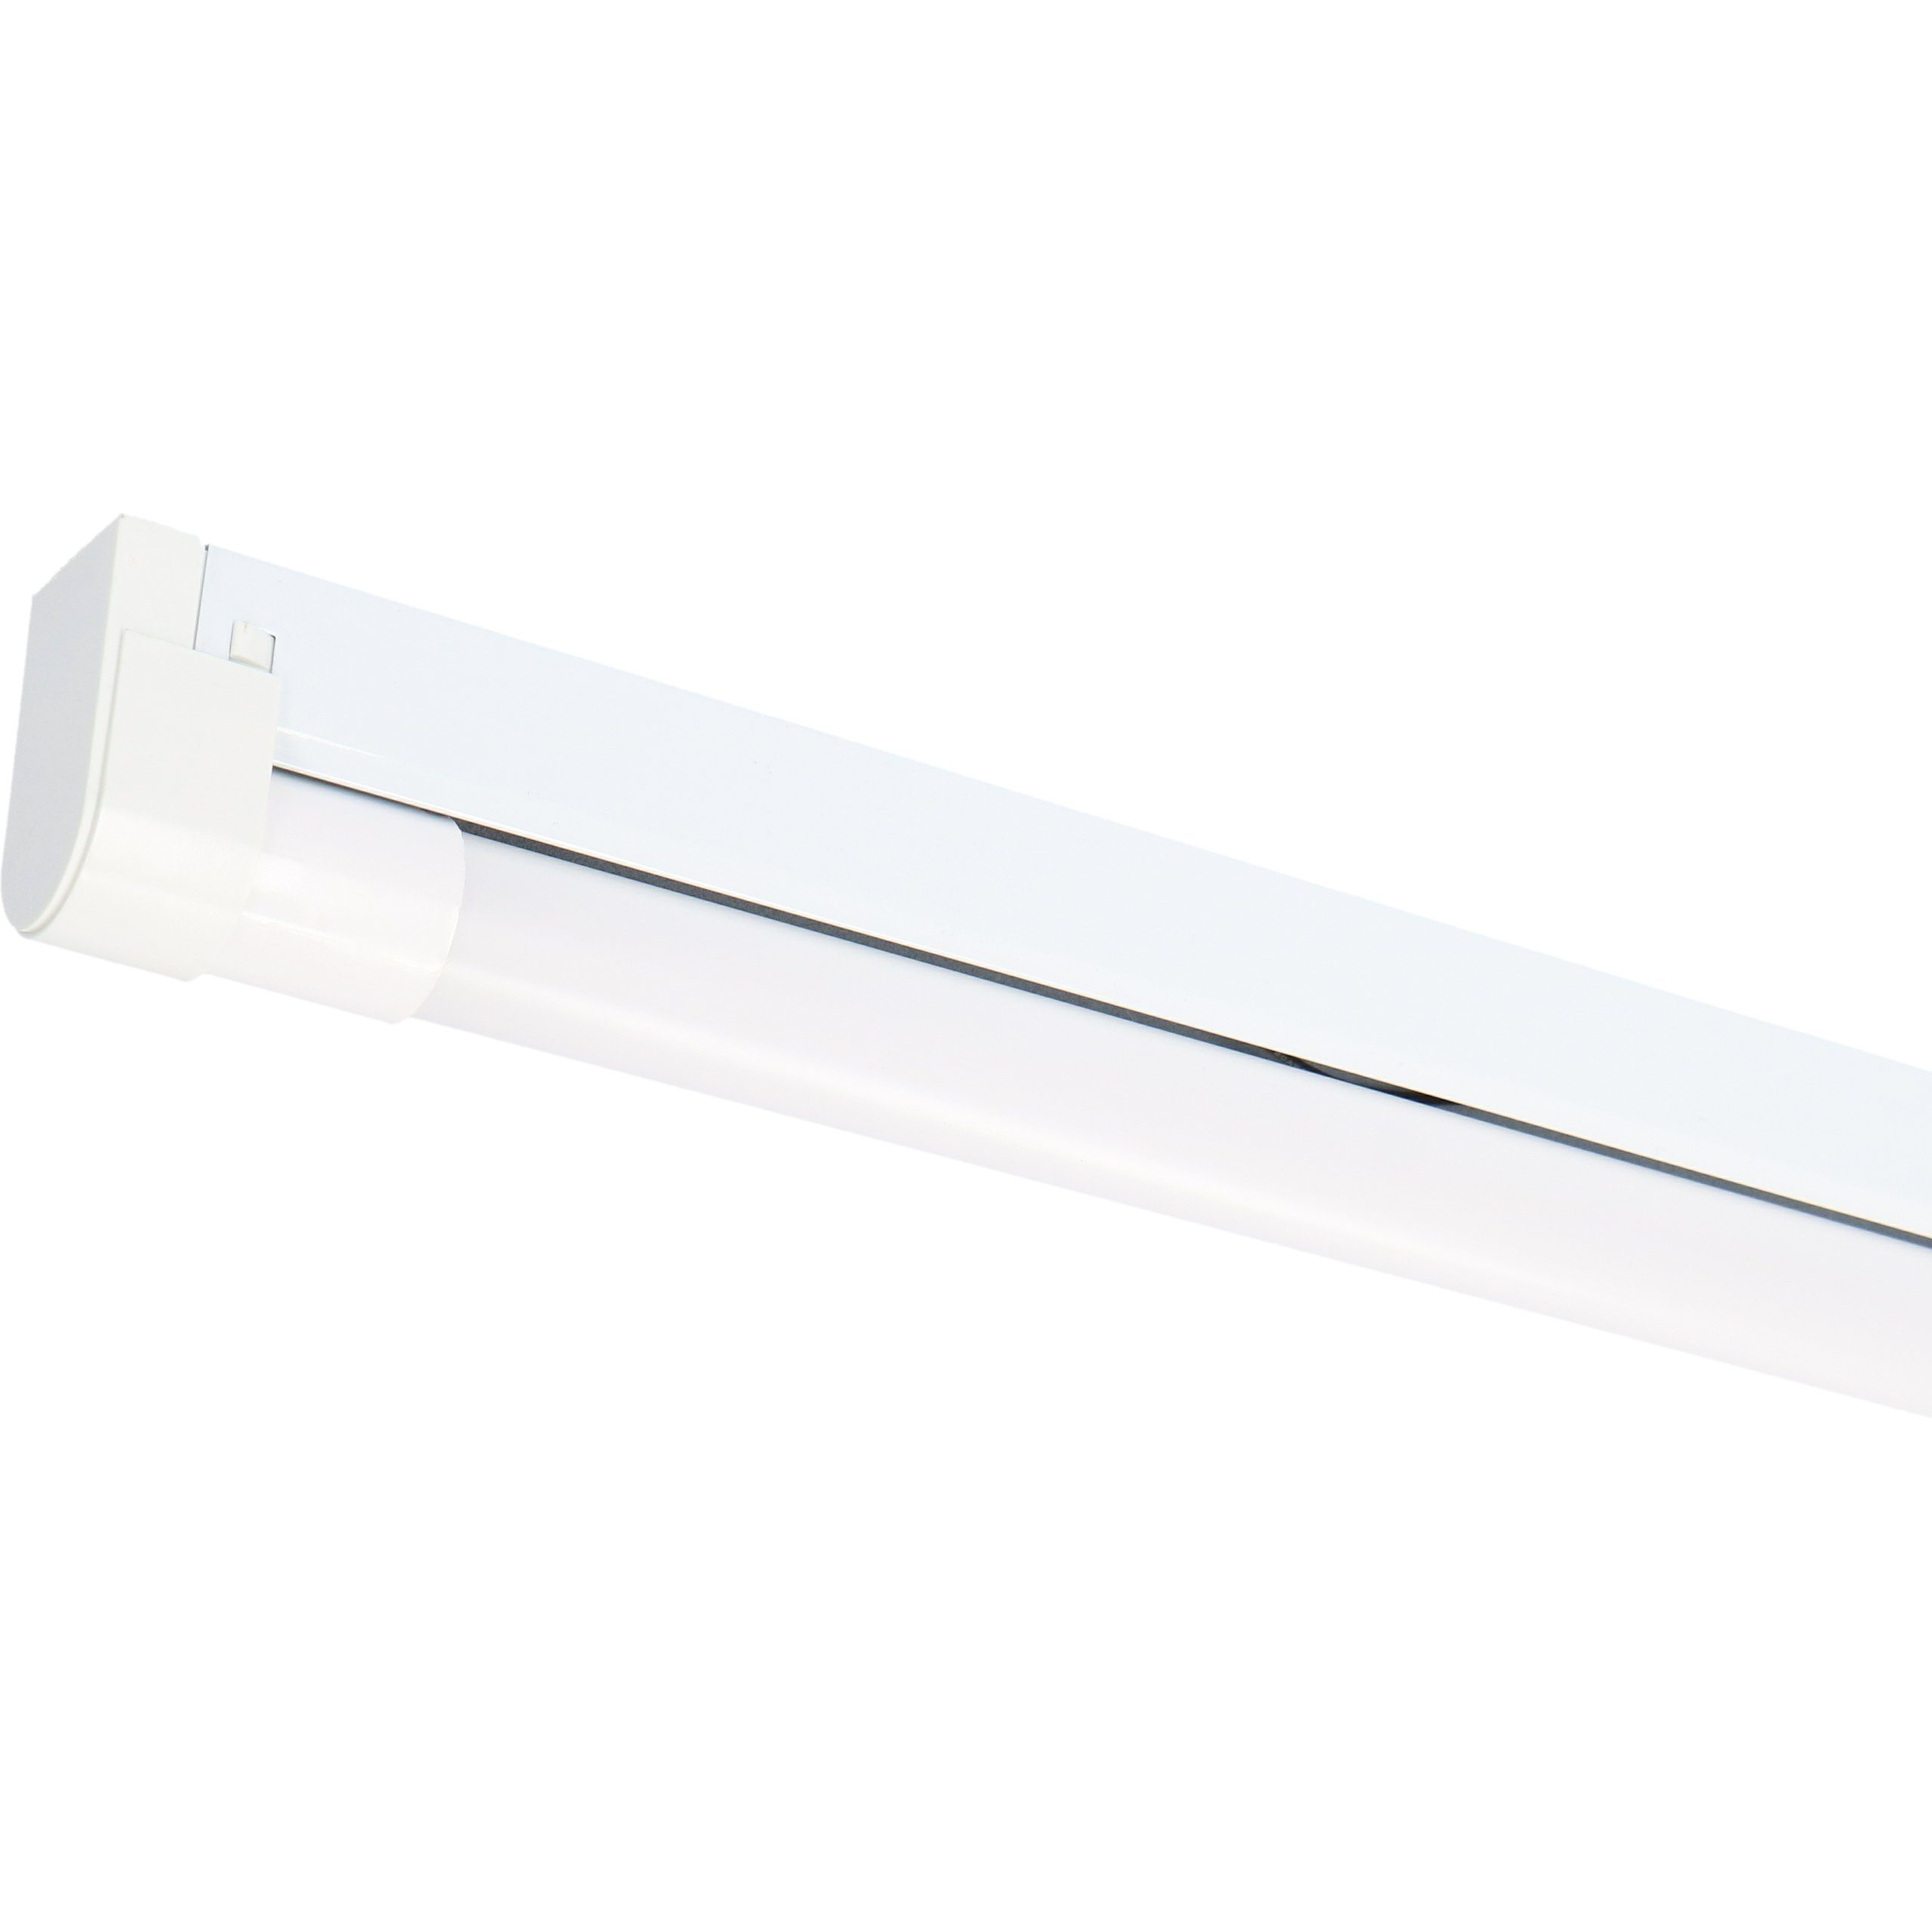 LED's light LED Unterbauleuchte 2400209 LED-Unterbauleuchte mit LED-Röhre,  LED, 120 cm 9 Watt neutralweiß G13